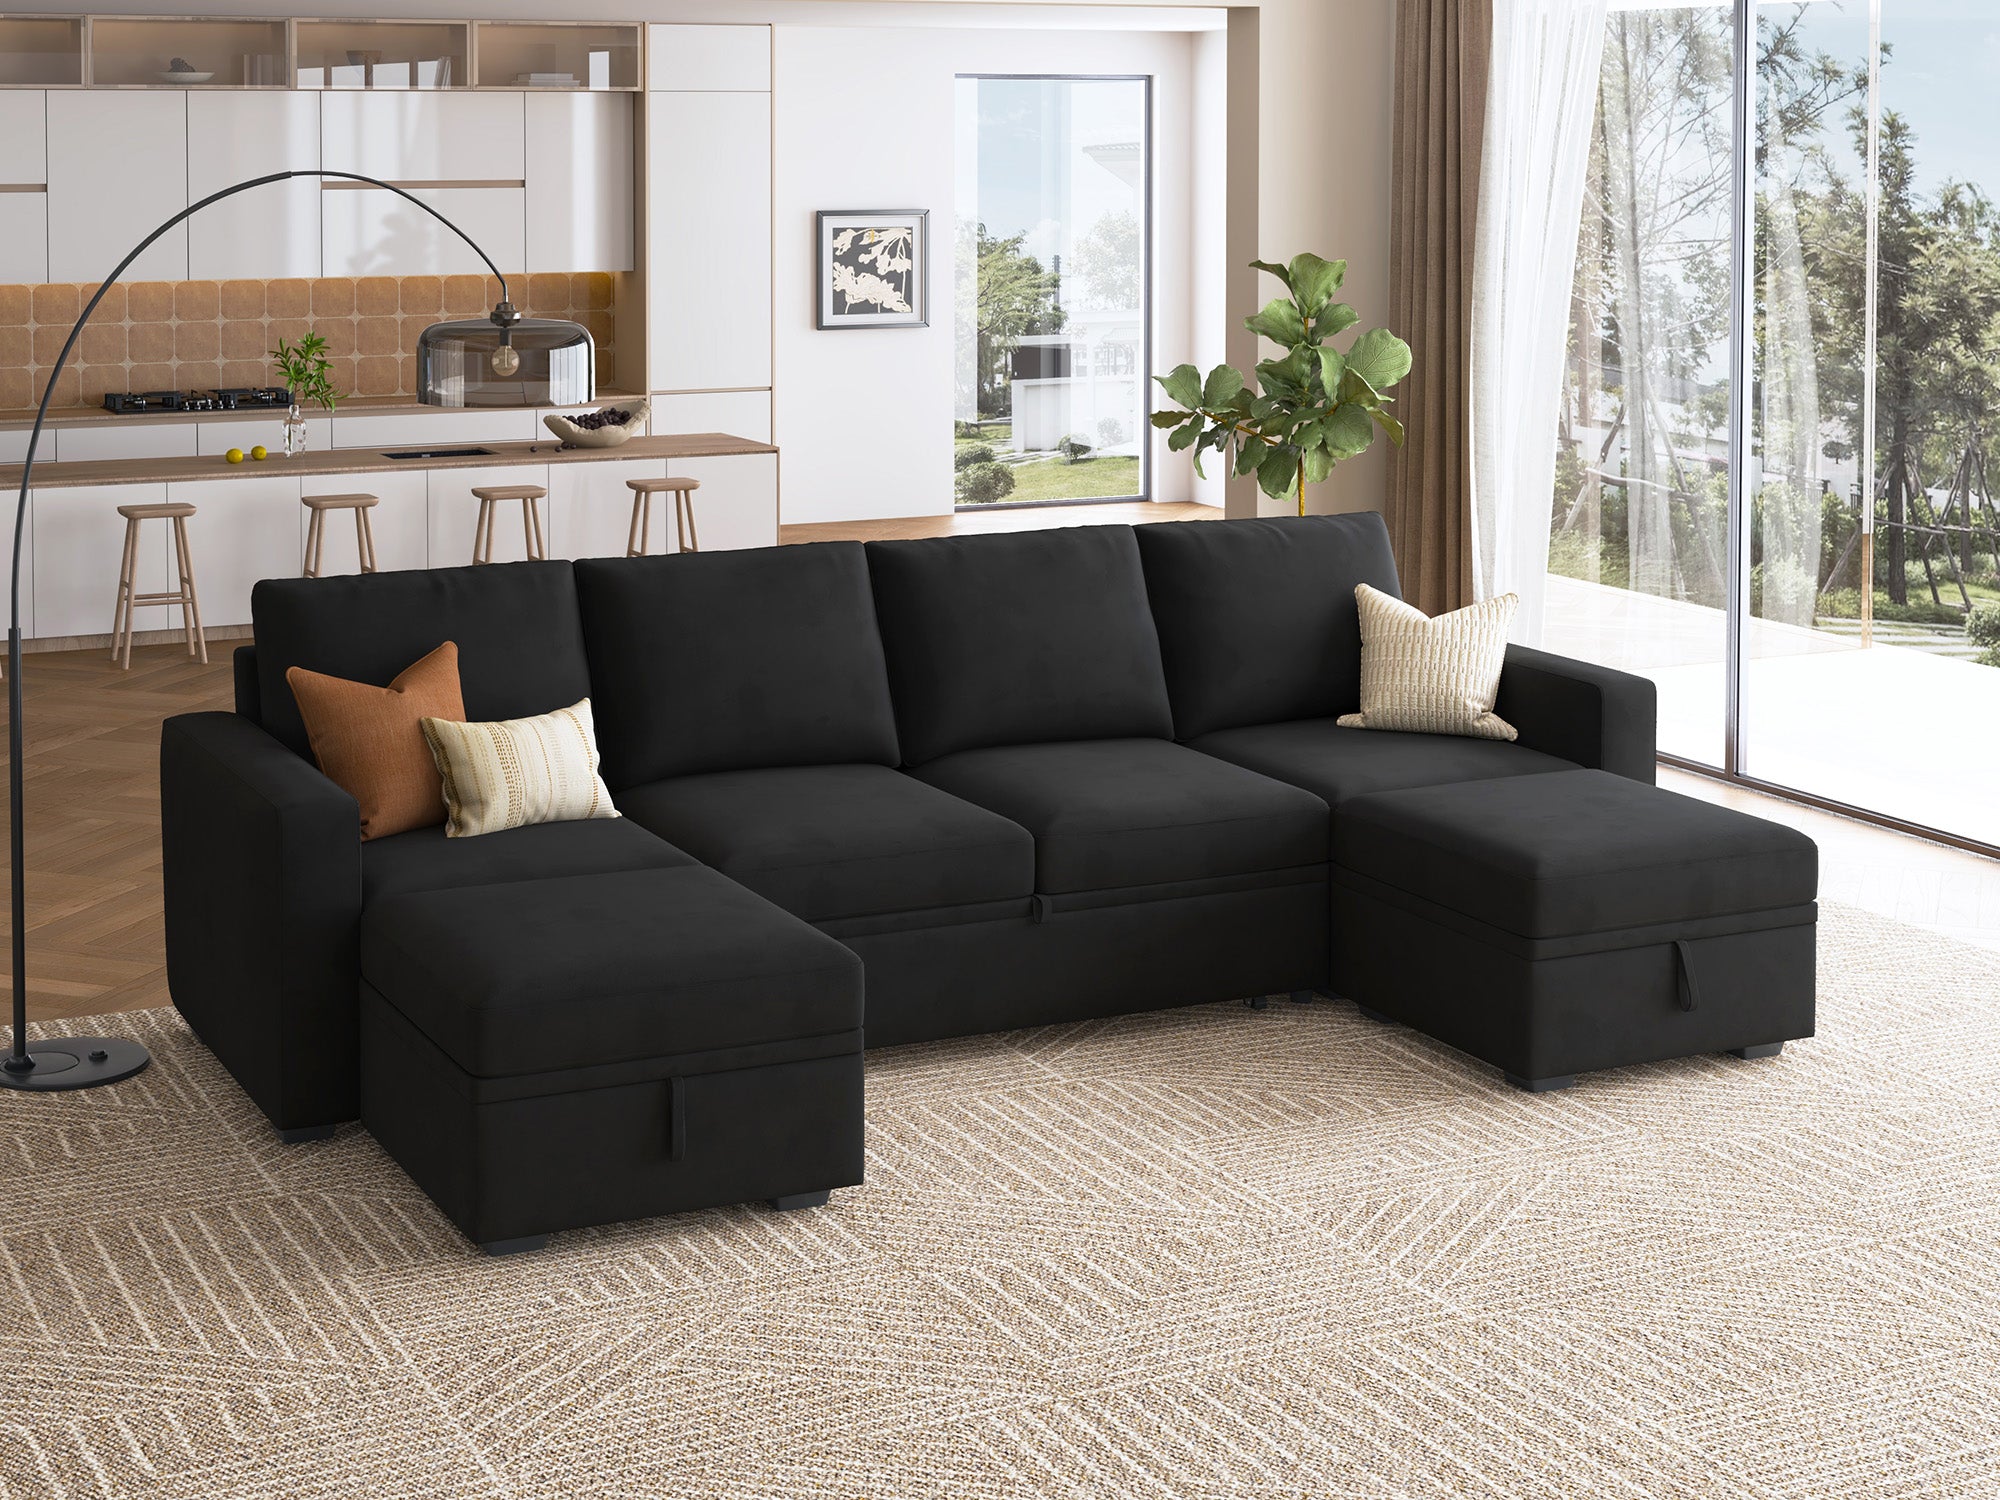 HONBAY Sleep Modular Sofa 6-Seat Sofa Bed with 4-Storage Space #Color_Velvet Black